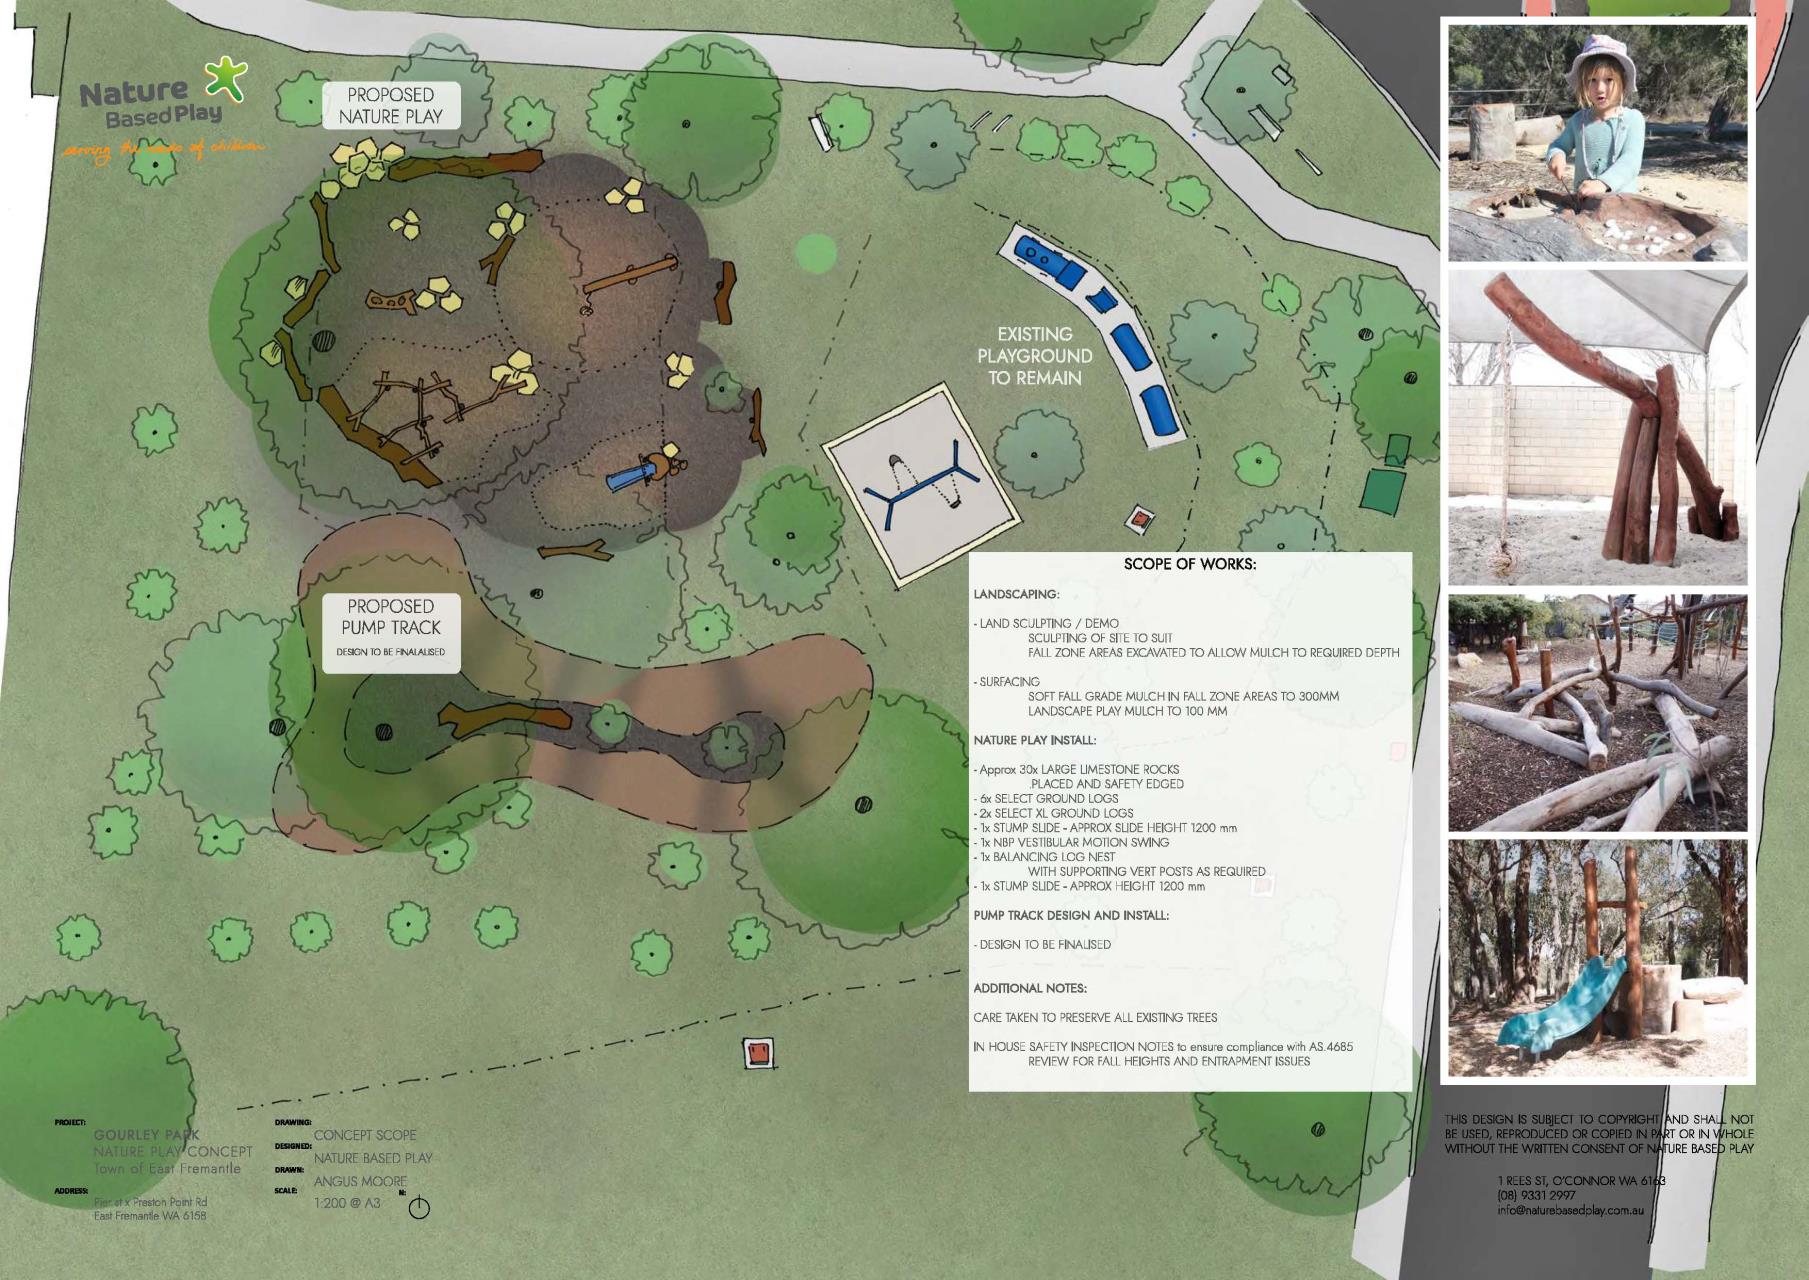 Gourley Park Plans